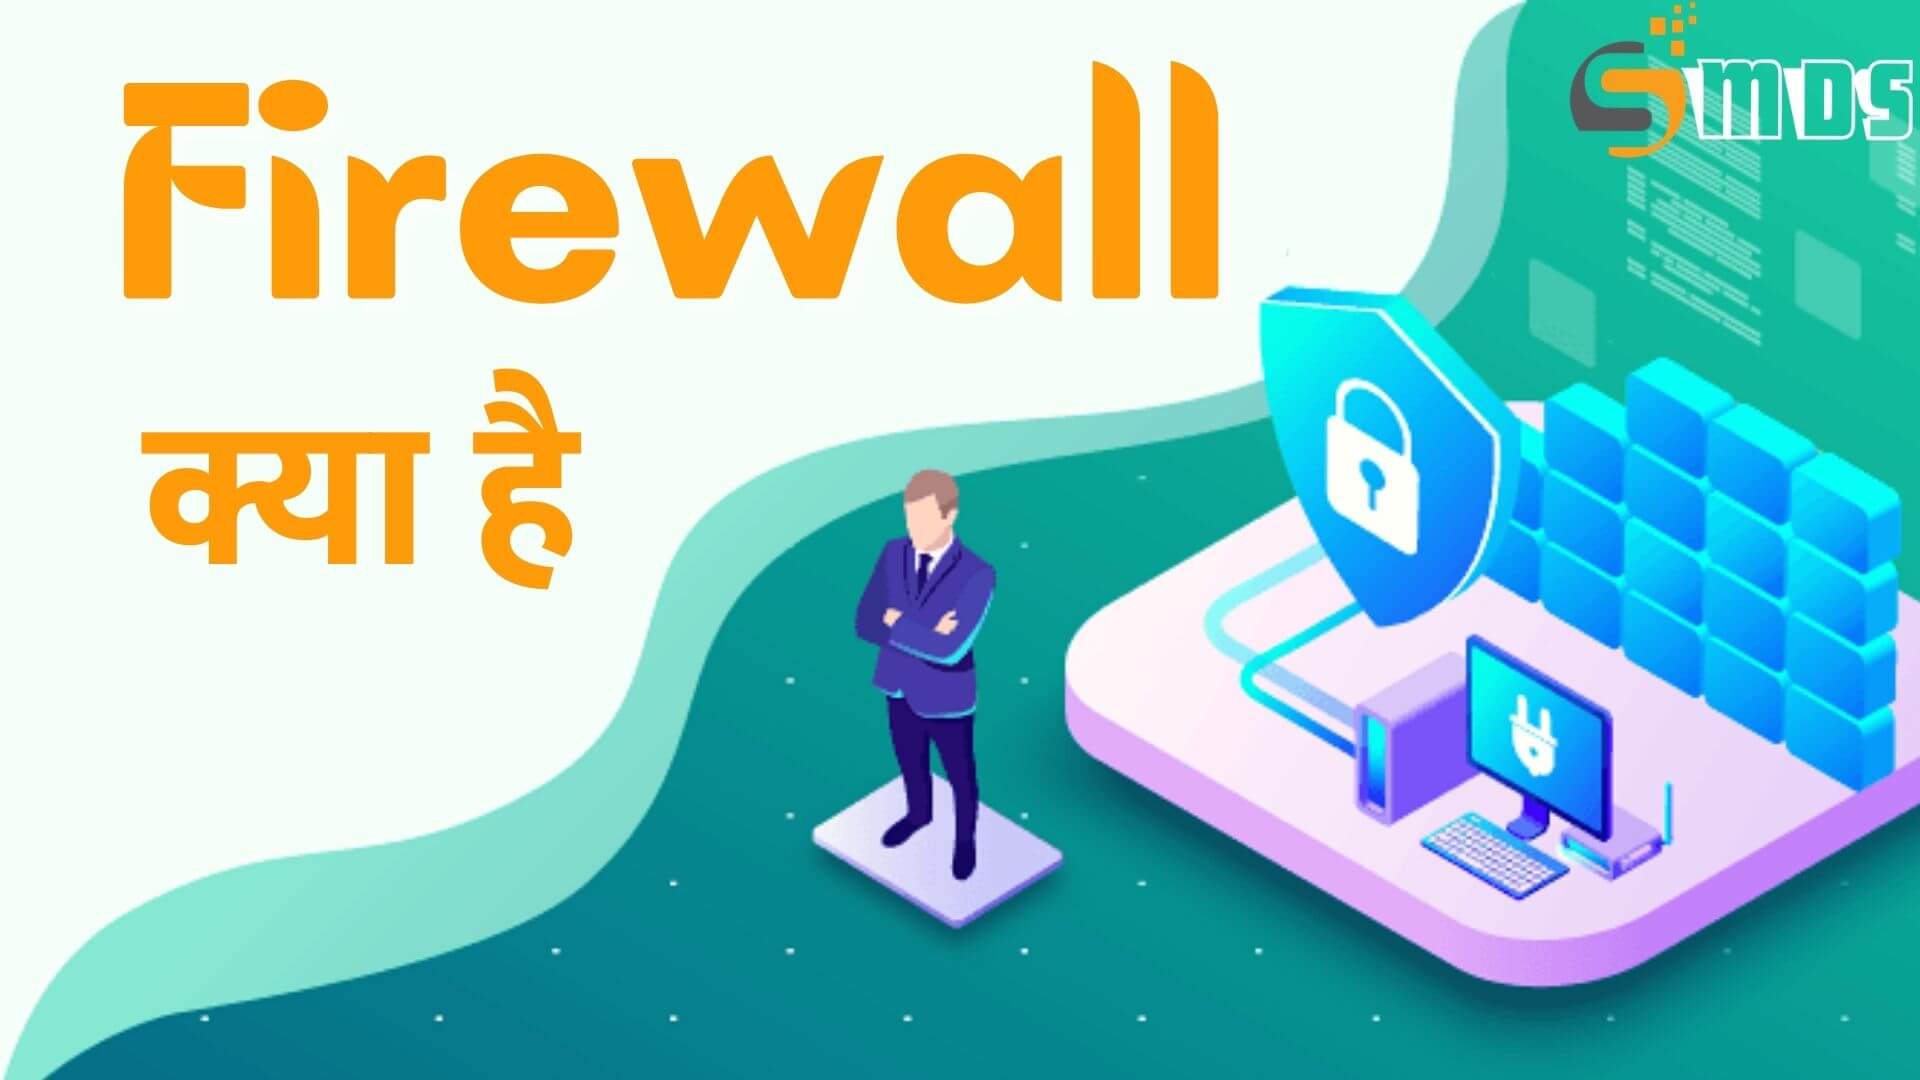 फ़ायरवॉल क्या है - What is Firewall in Hindi, firewall kya hai, फ़ायरवॉल के प्रकार - Type of Firewall in Hindi